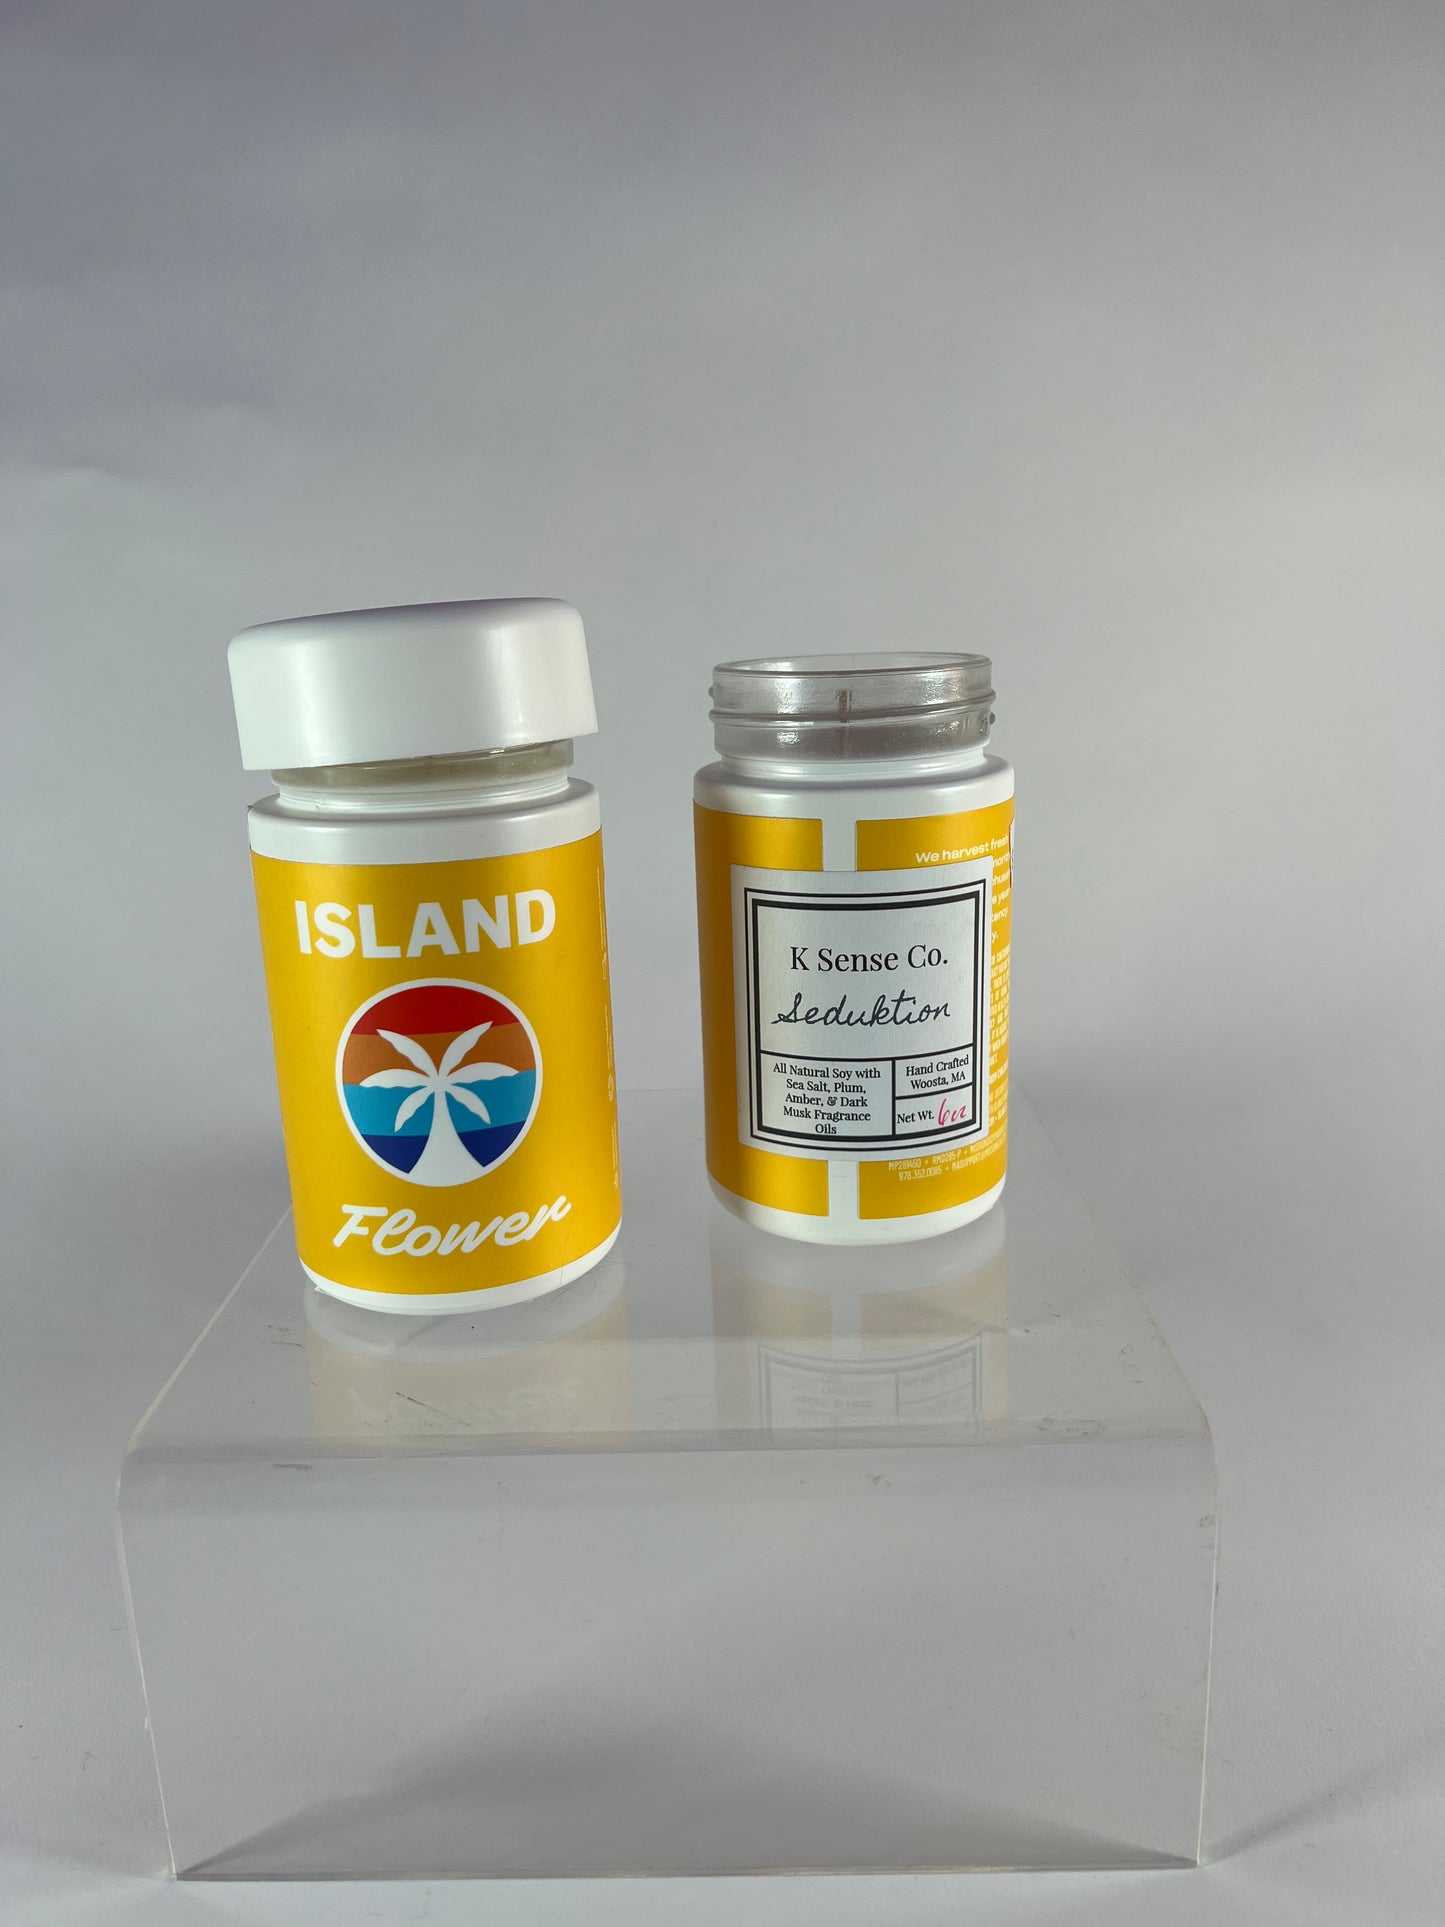 6 oz Seduktion candle in repurposed Island cannabis jar